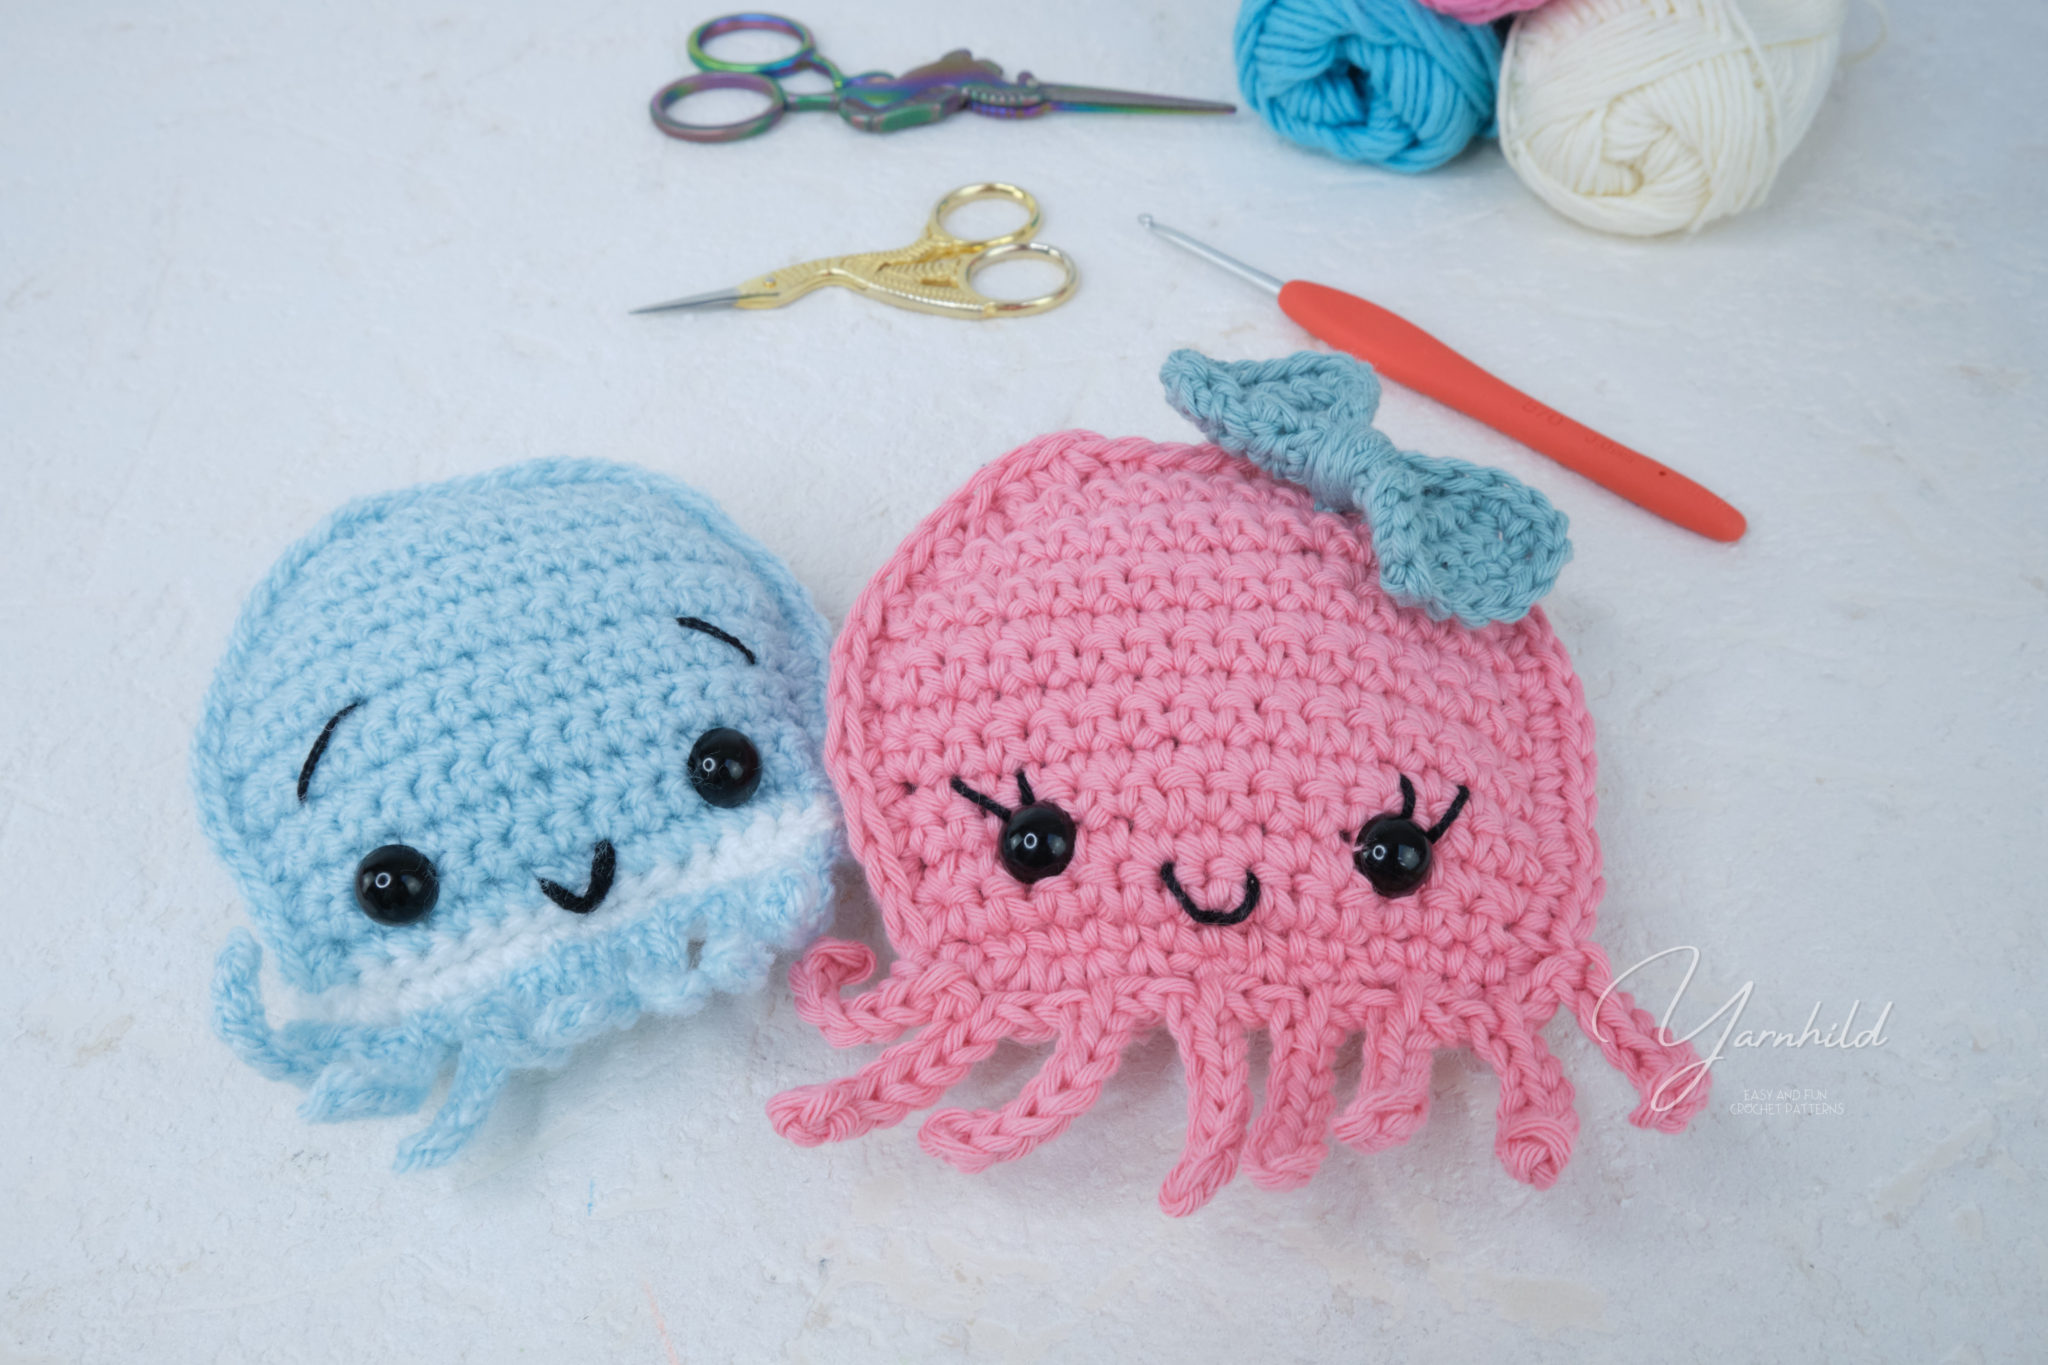 How to crochet an octopus - Beginner friendly amigurumi pattern.